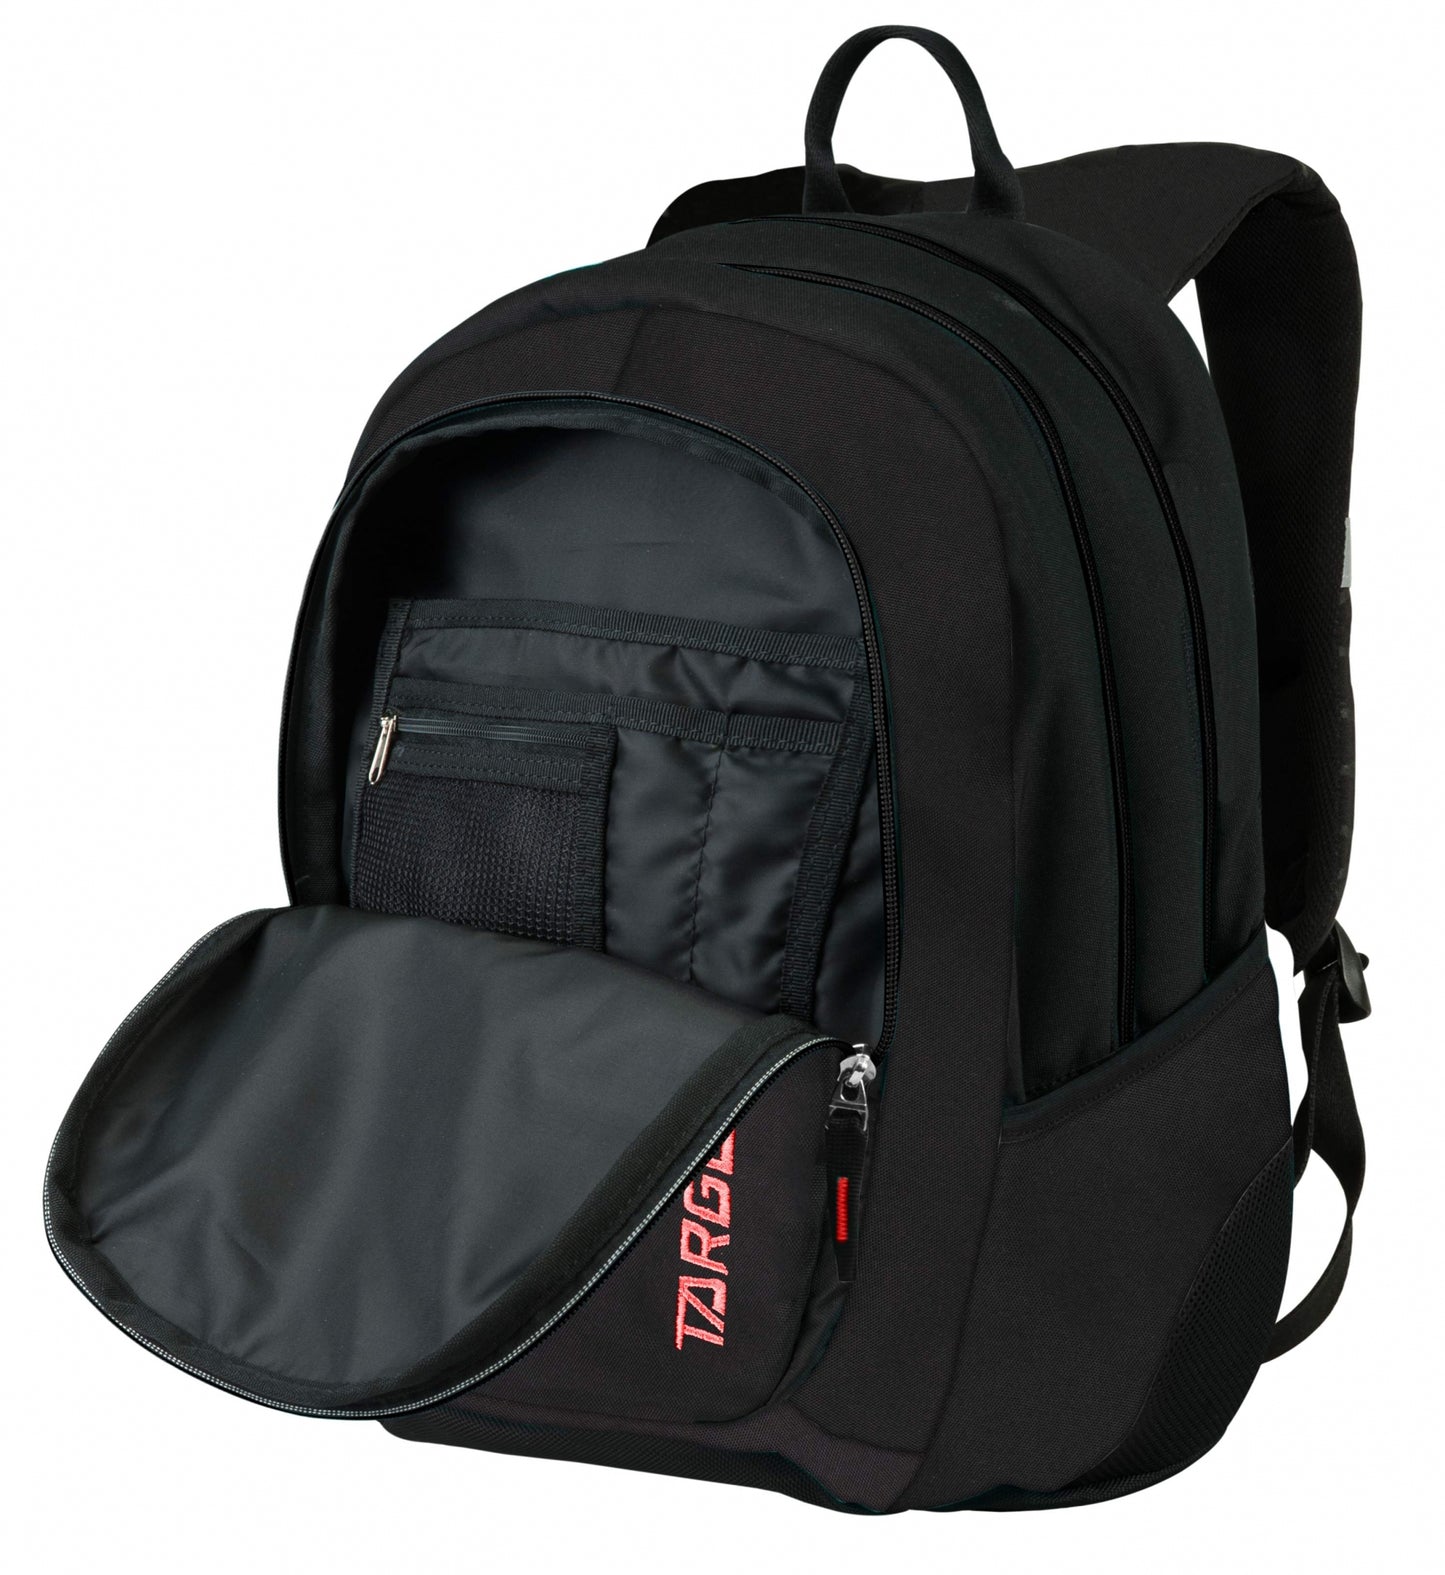 Backpack Large 3 Zip Black